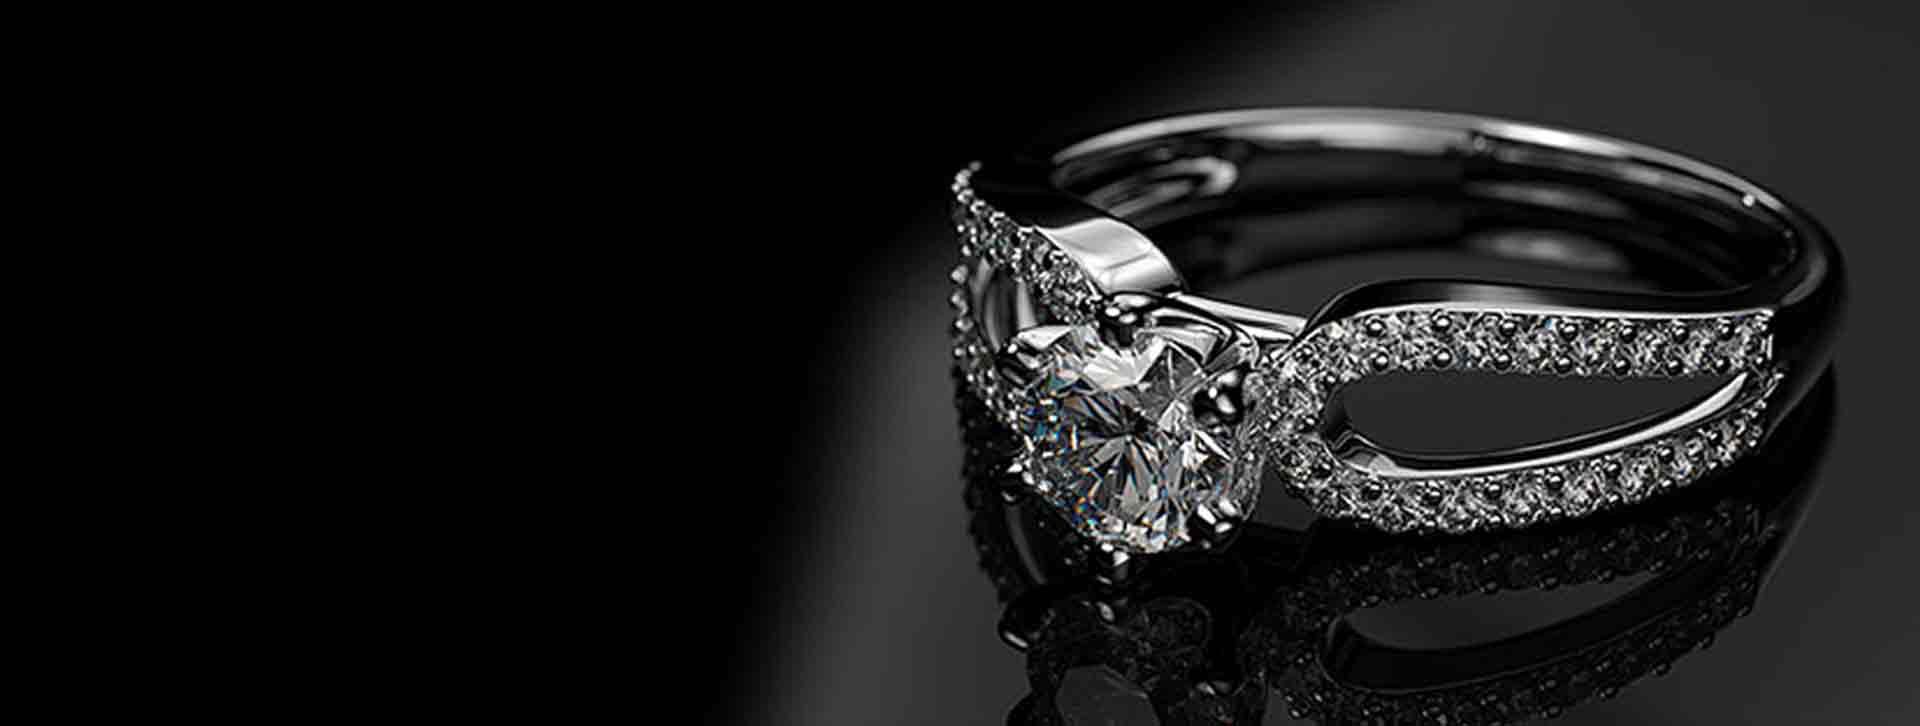 diamond and jewelry buyers in Florida